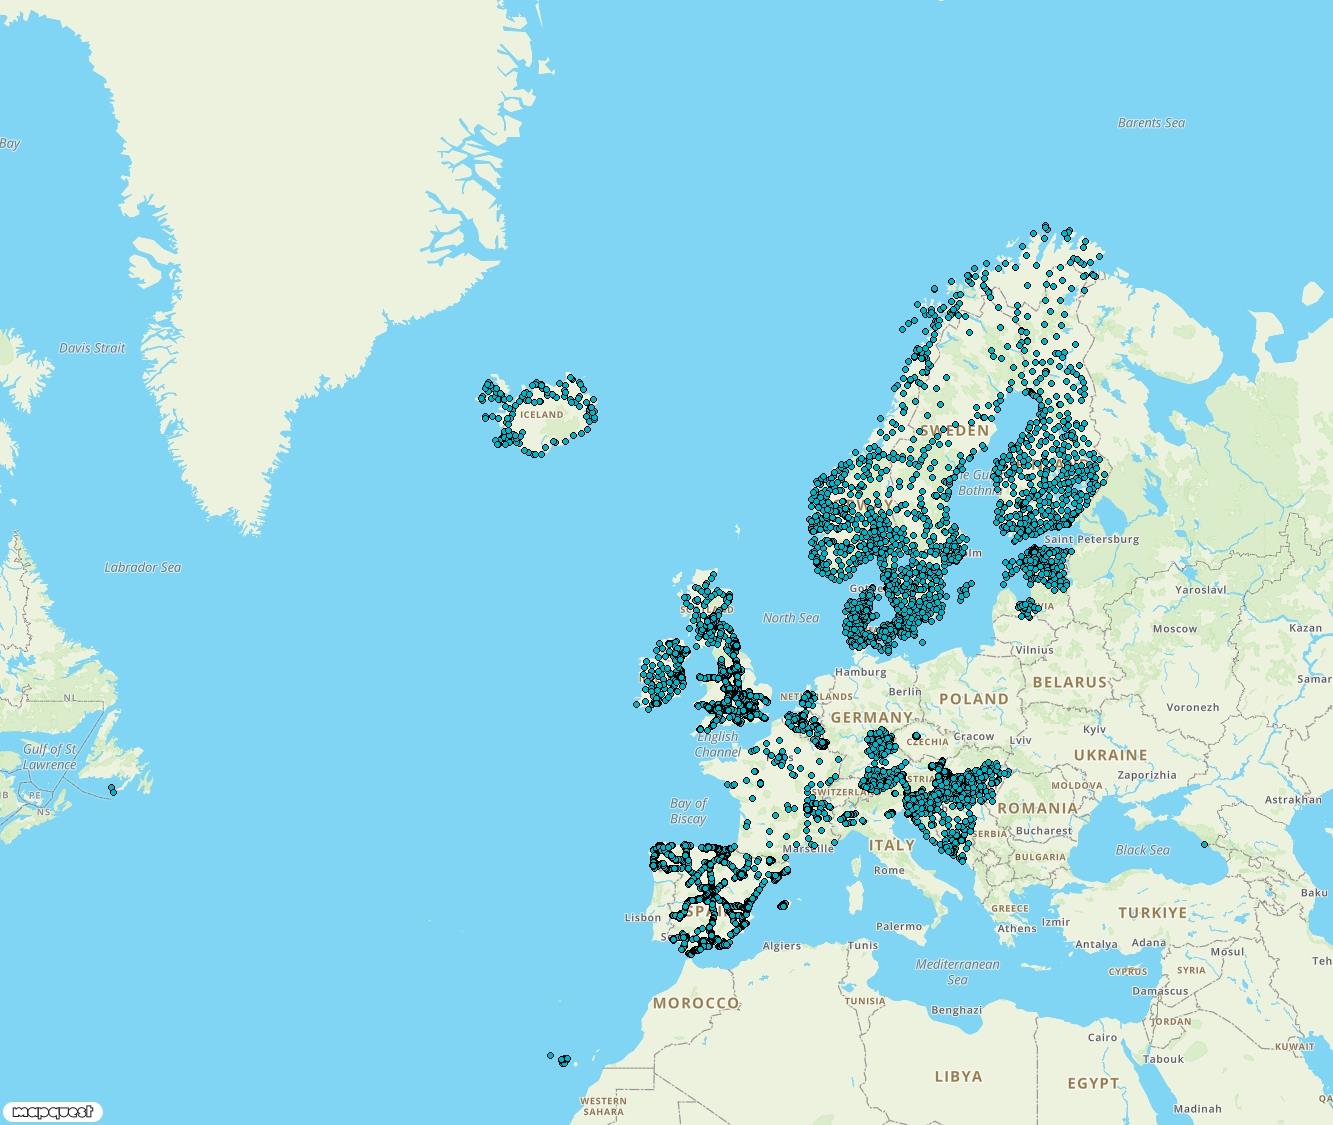 Traffic Camera Coverage Across Europe